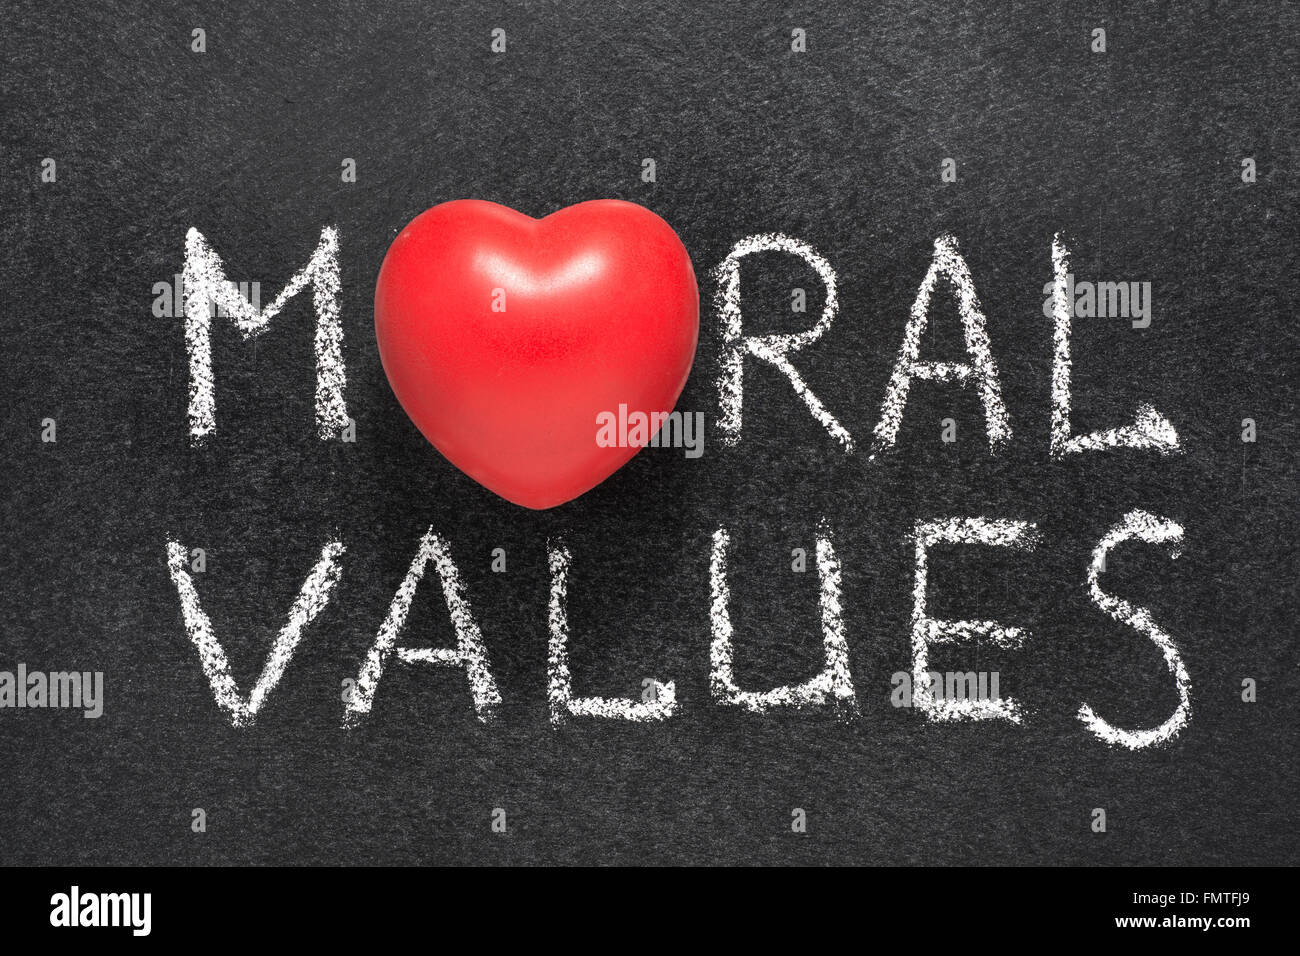 moral values phrase handwritten on blackboard with heart symbol instead O Stock Photo